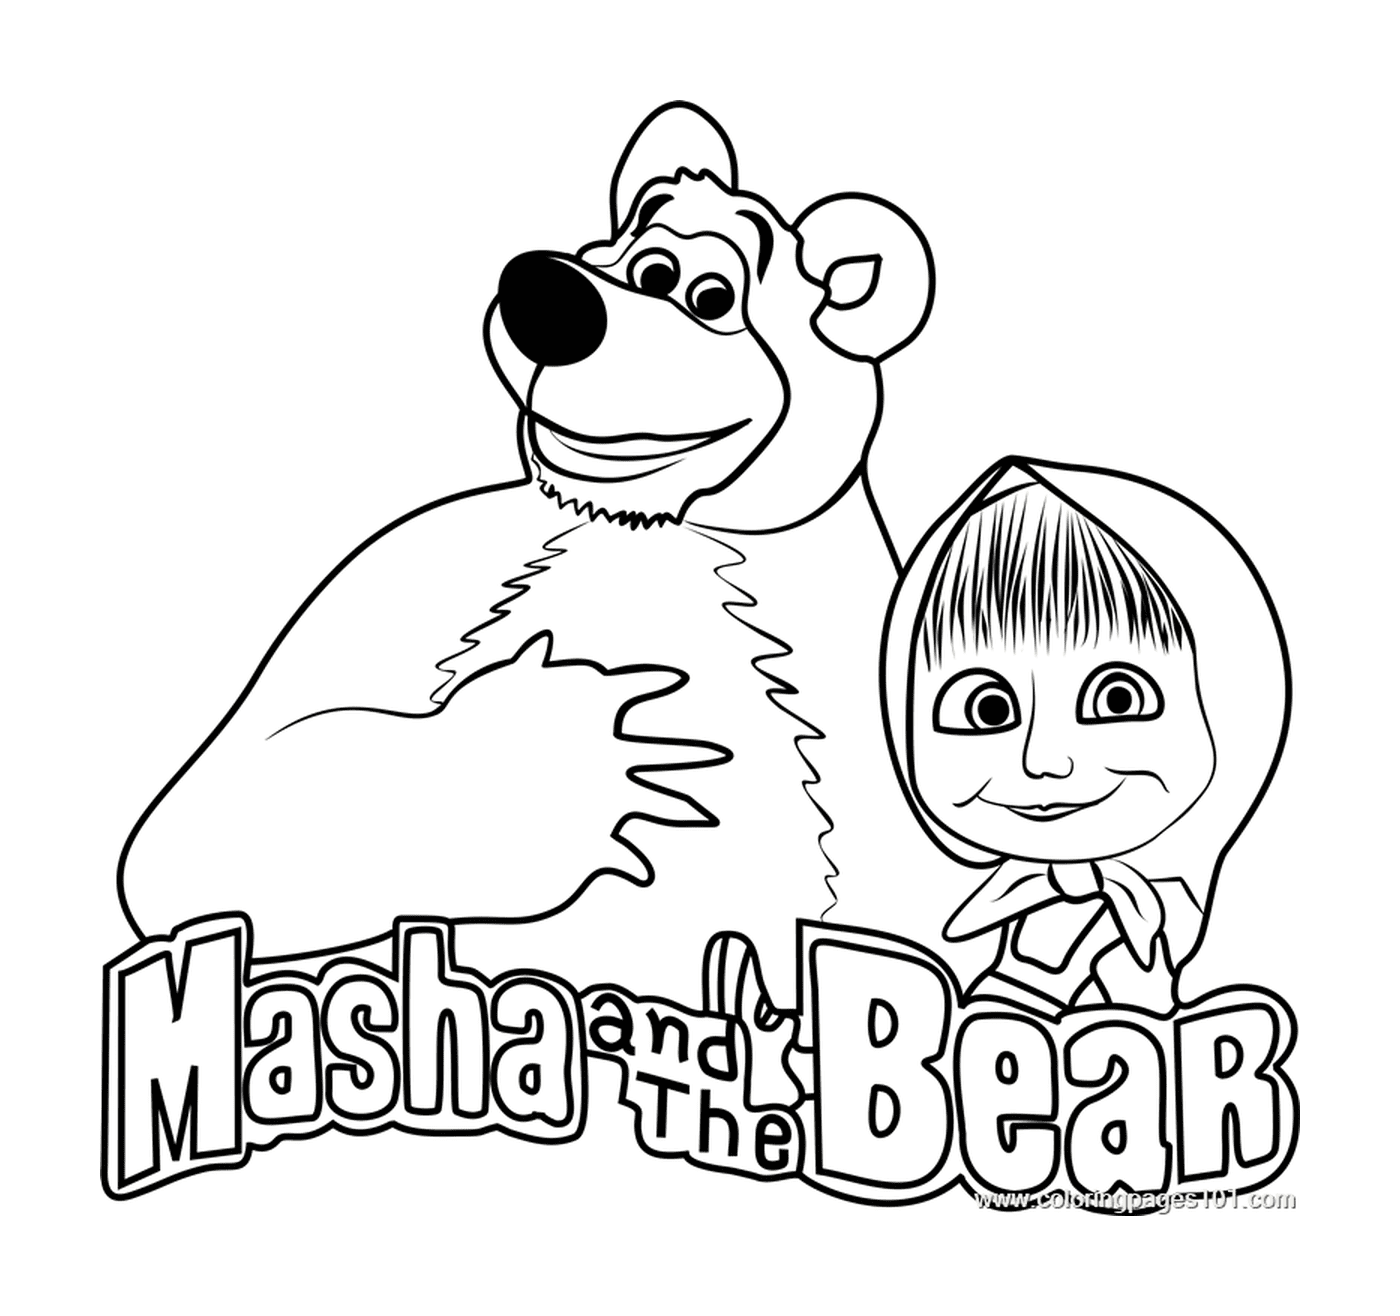  Logo Masha and Michka, an adorable duo 